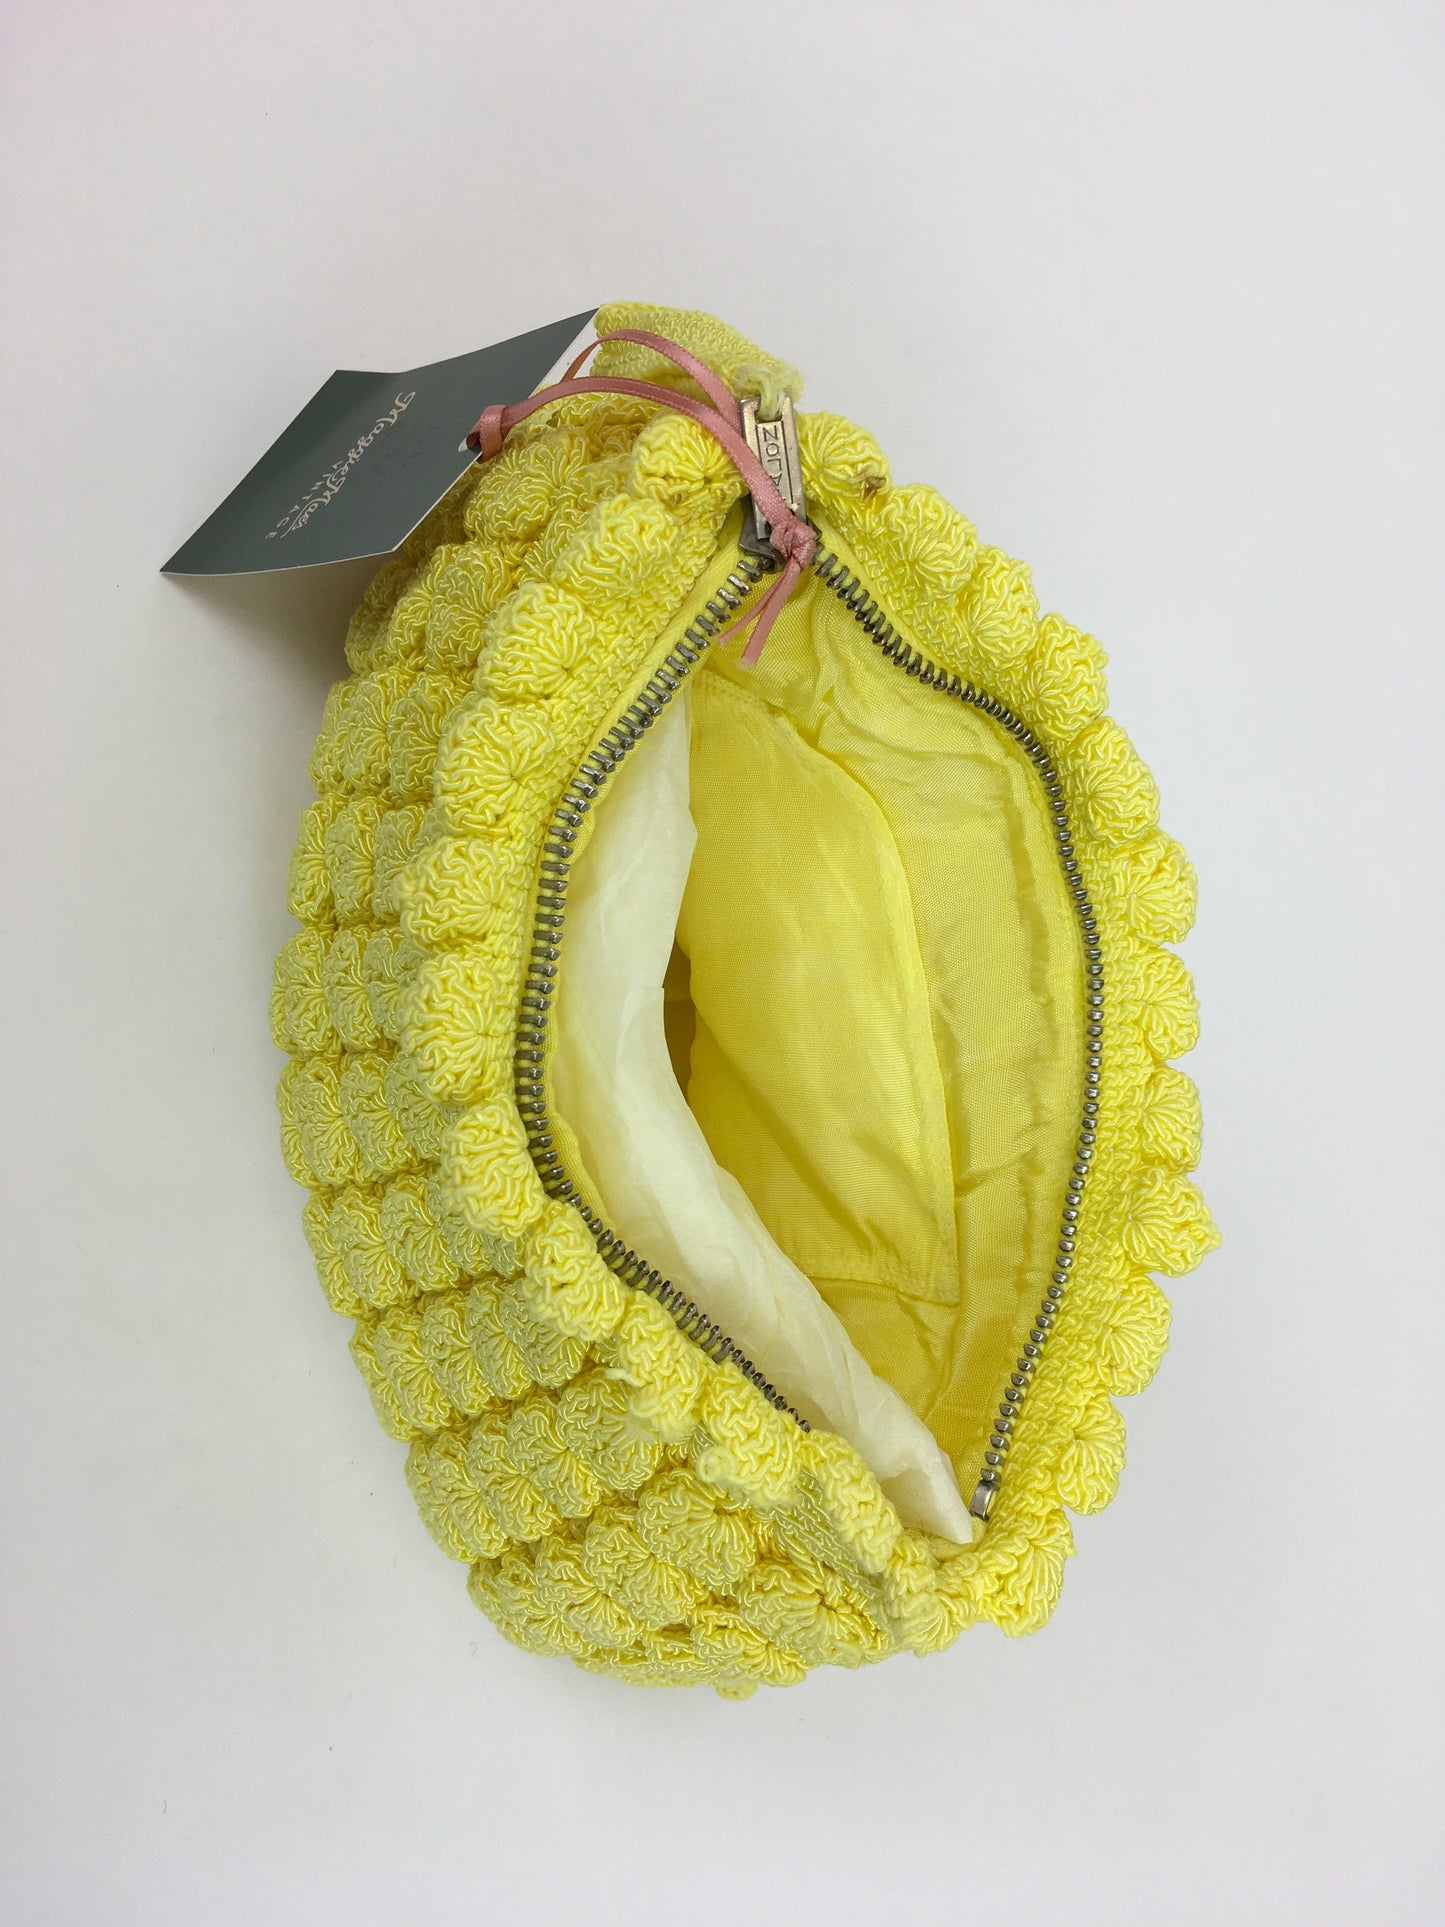 Original 1940s Popcorn Knitted Handbag - In a Glorious Sunshine Yellow